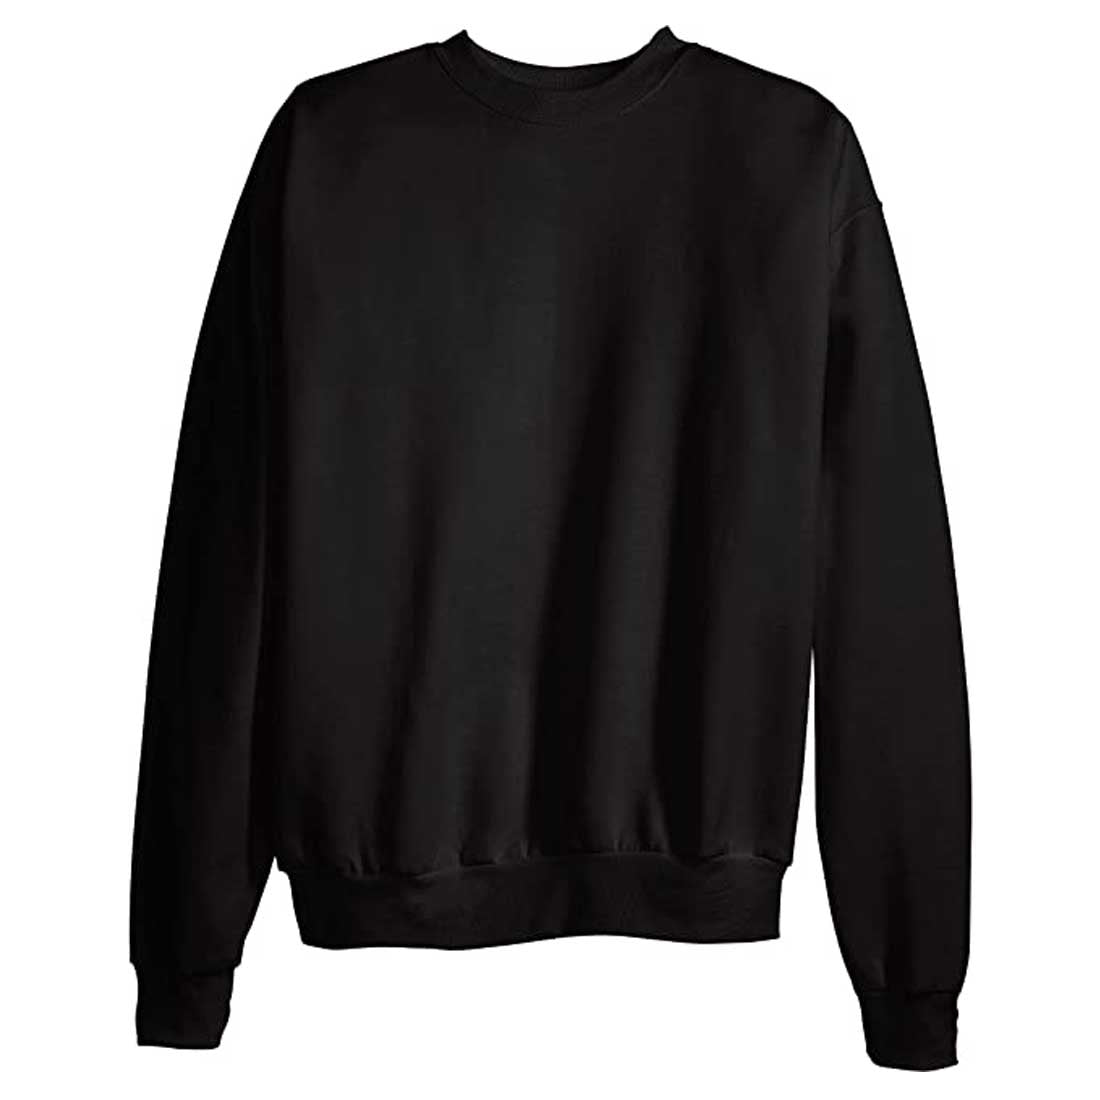 Printed Custom Unisex Sweatshirt Round Neck - Add Initials